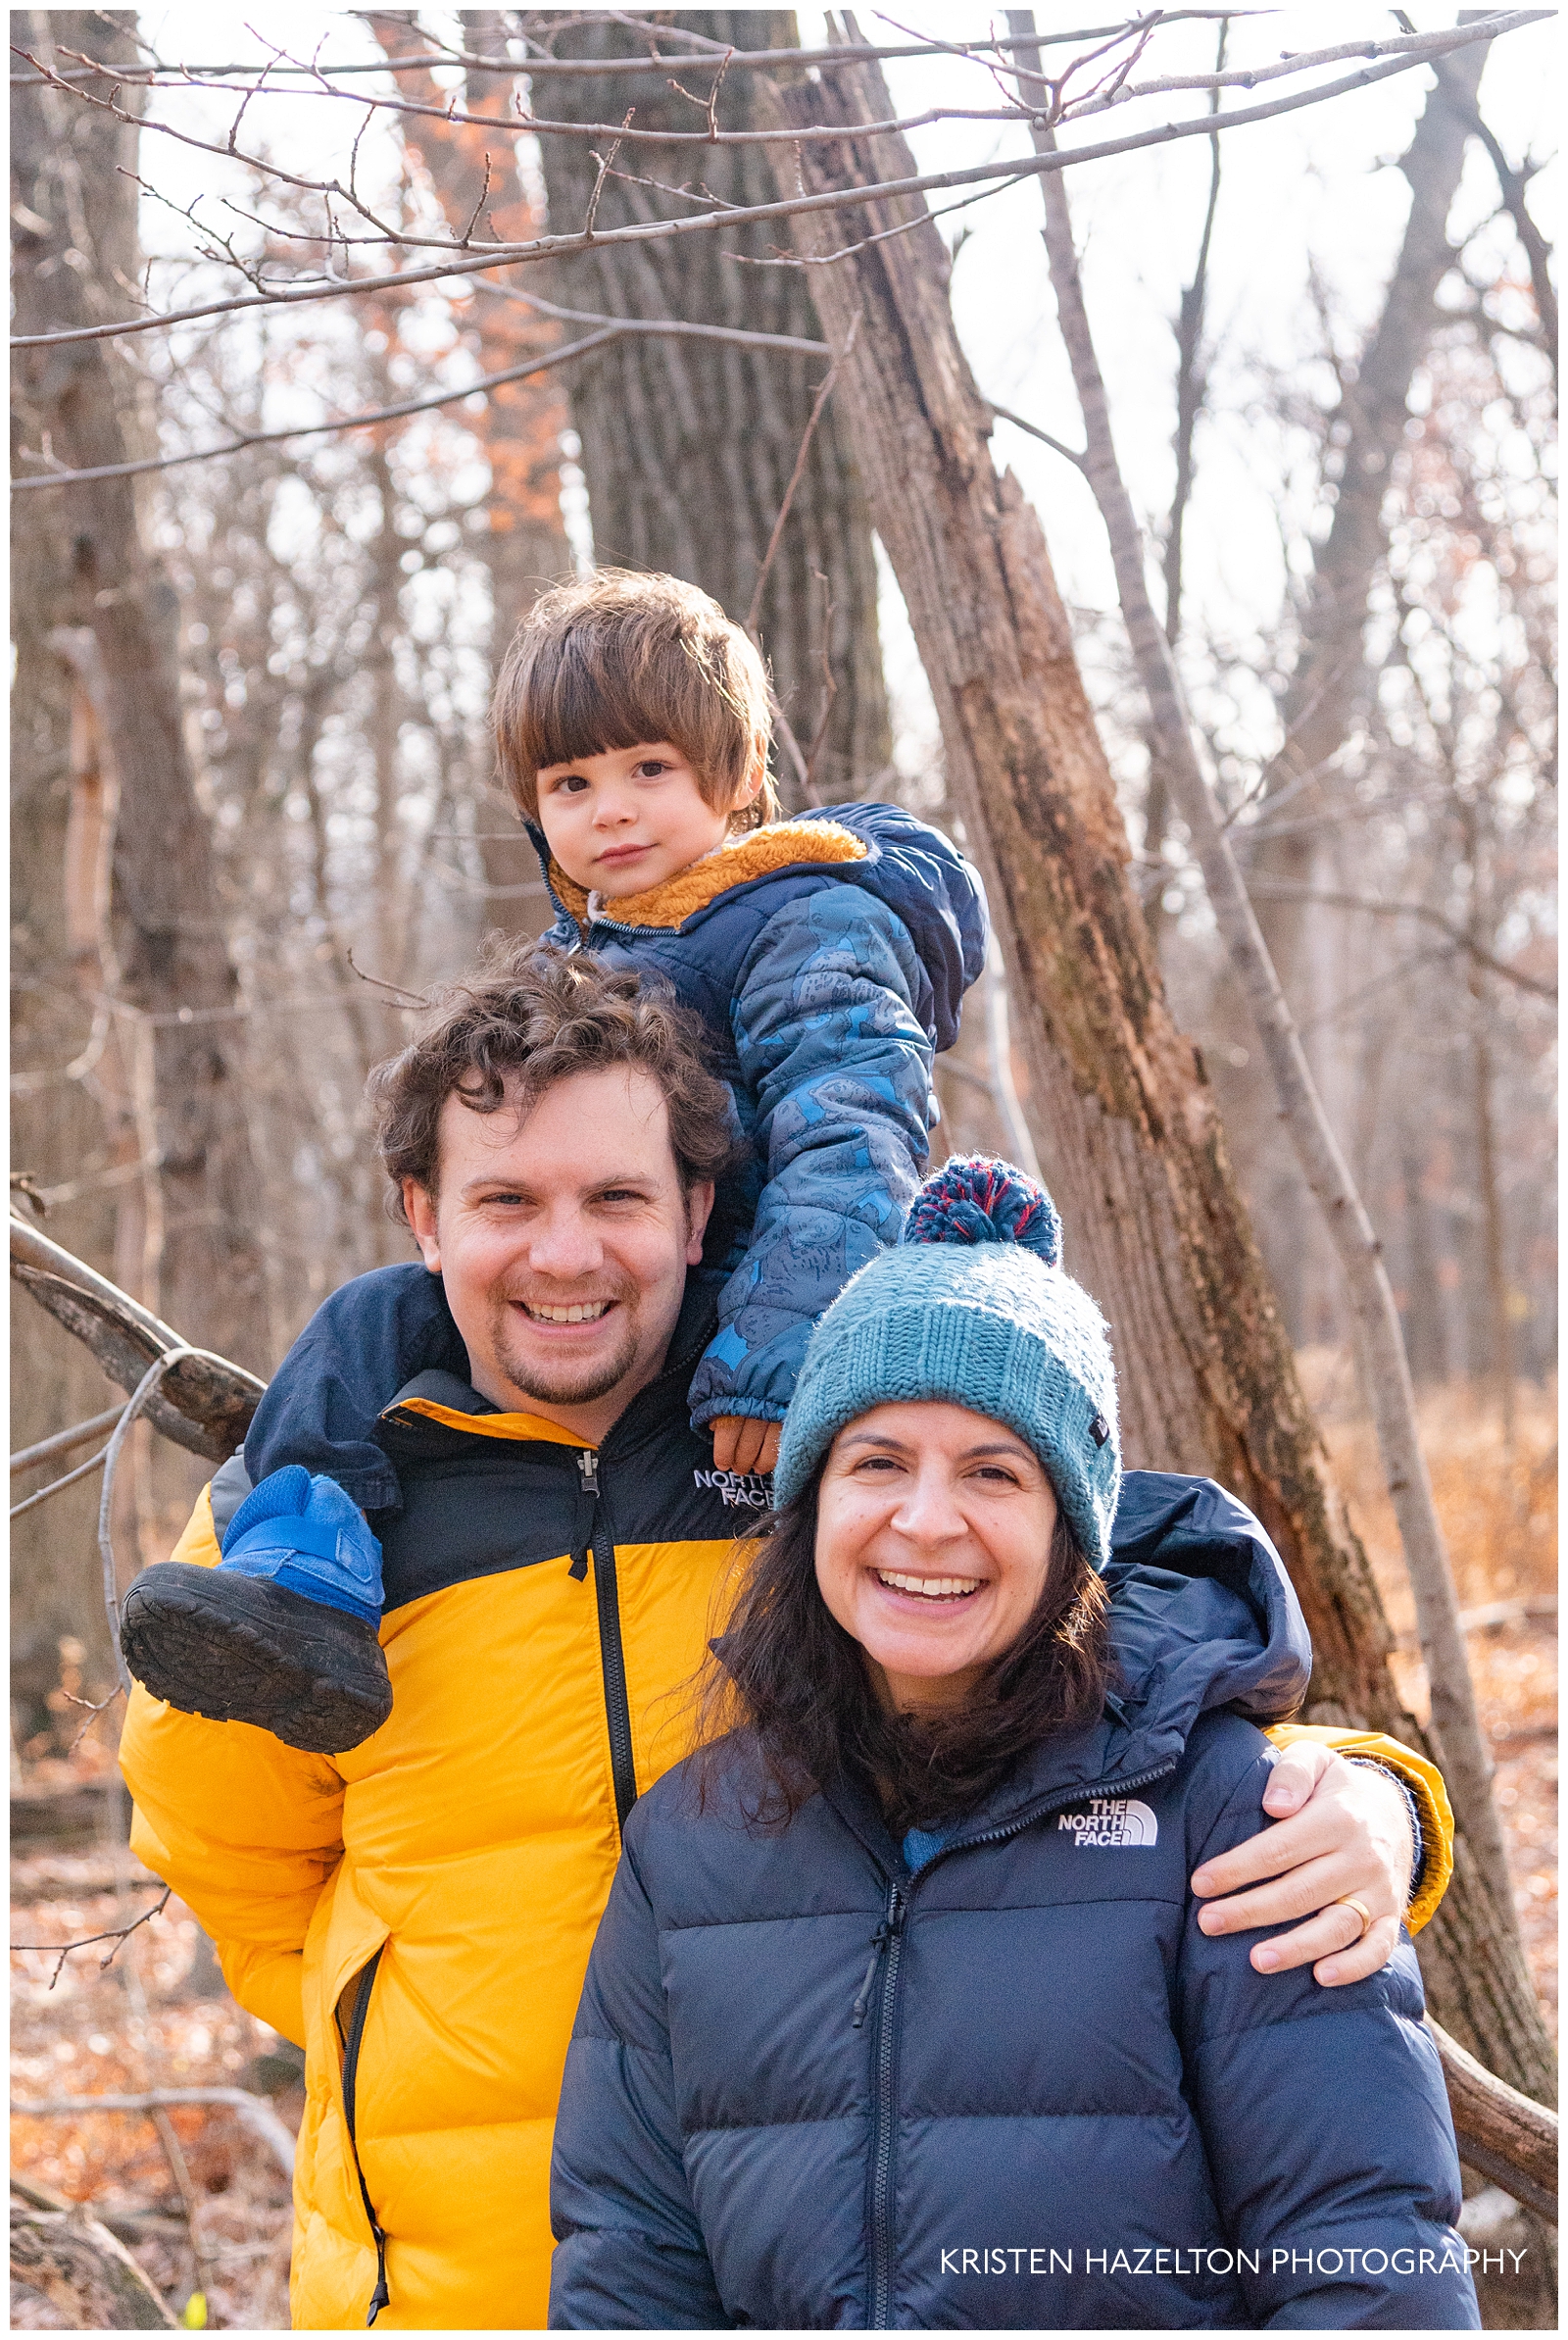 Cheerful family portrait of three by Oak Park photographer Kristen Hazelton